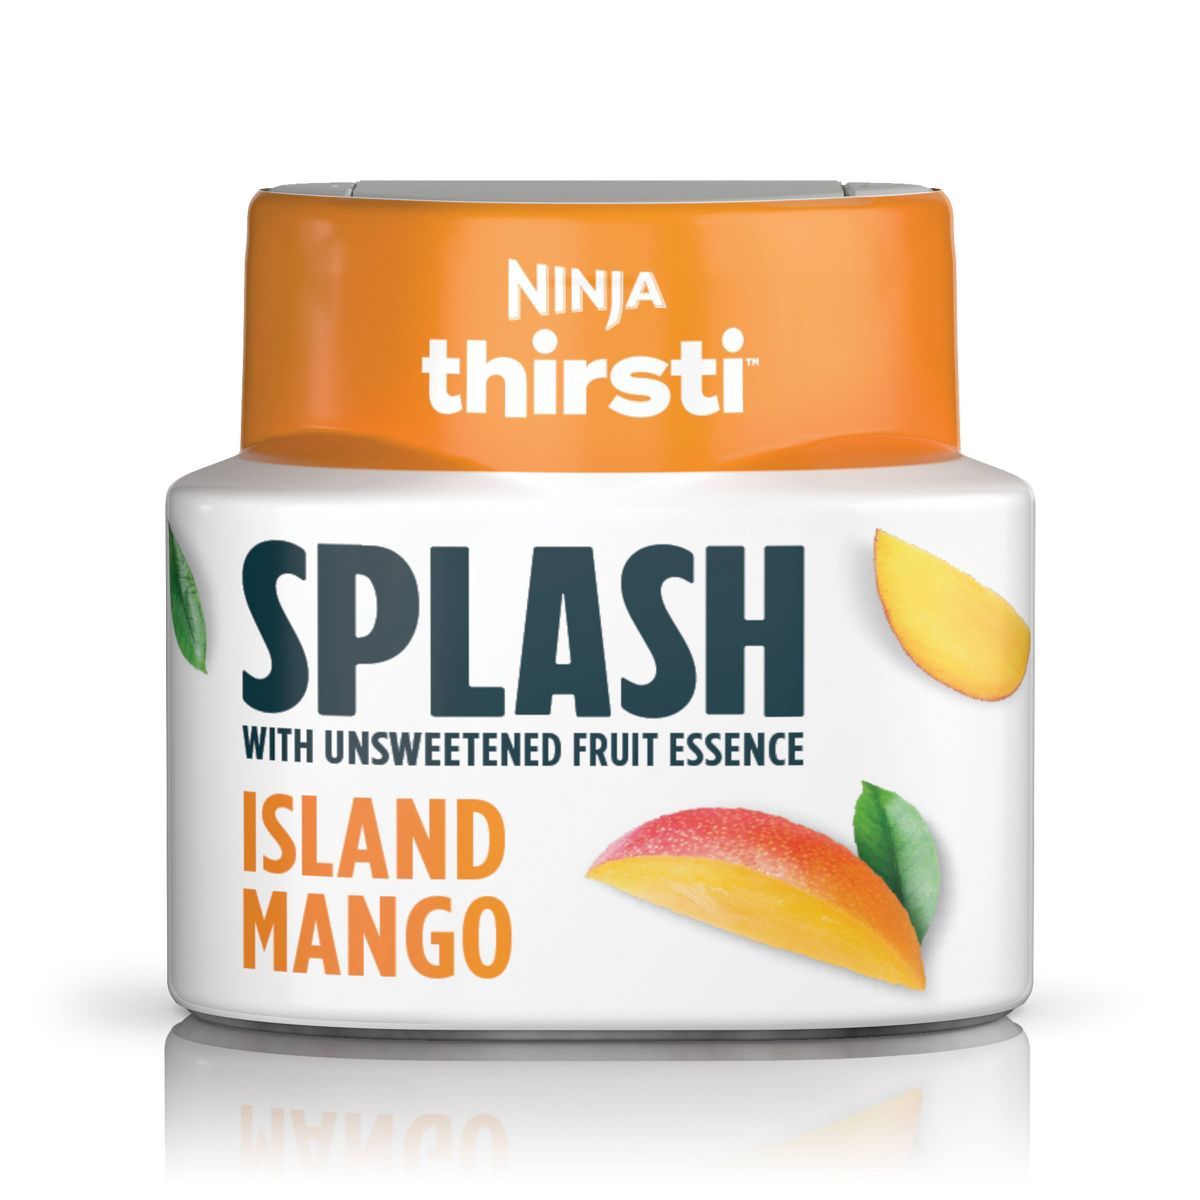 Ninja Thirsti SPLASH Unsweetened Island Mango Flavored Water Drops | Target